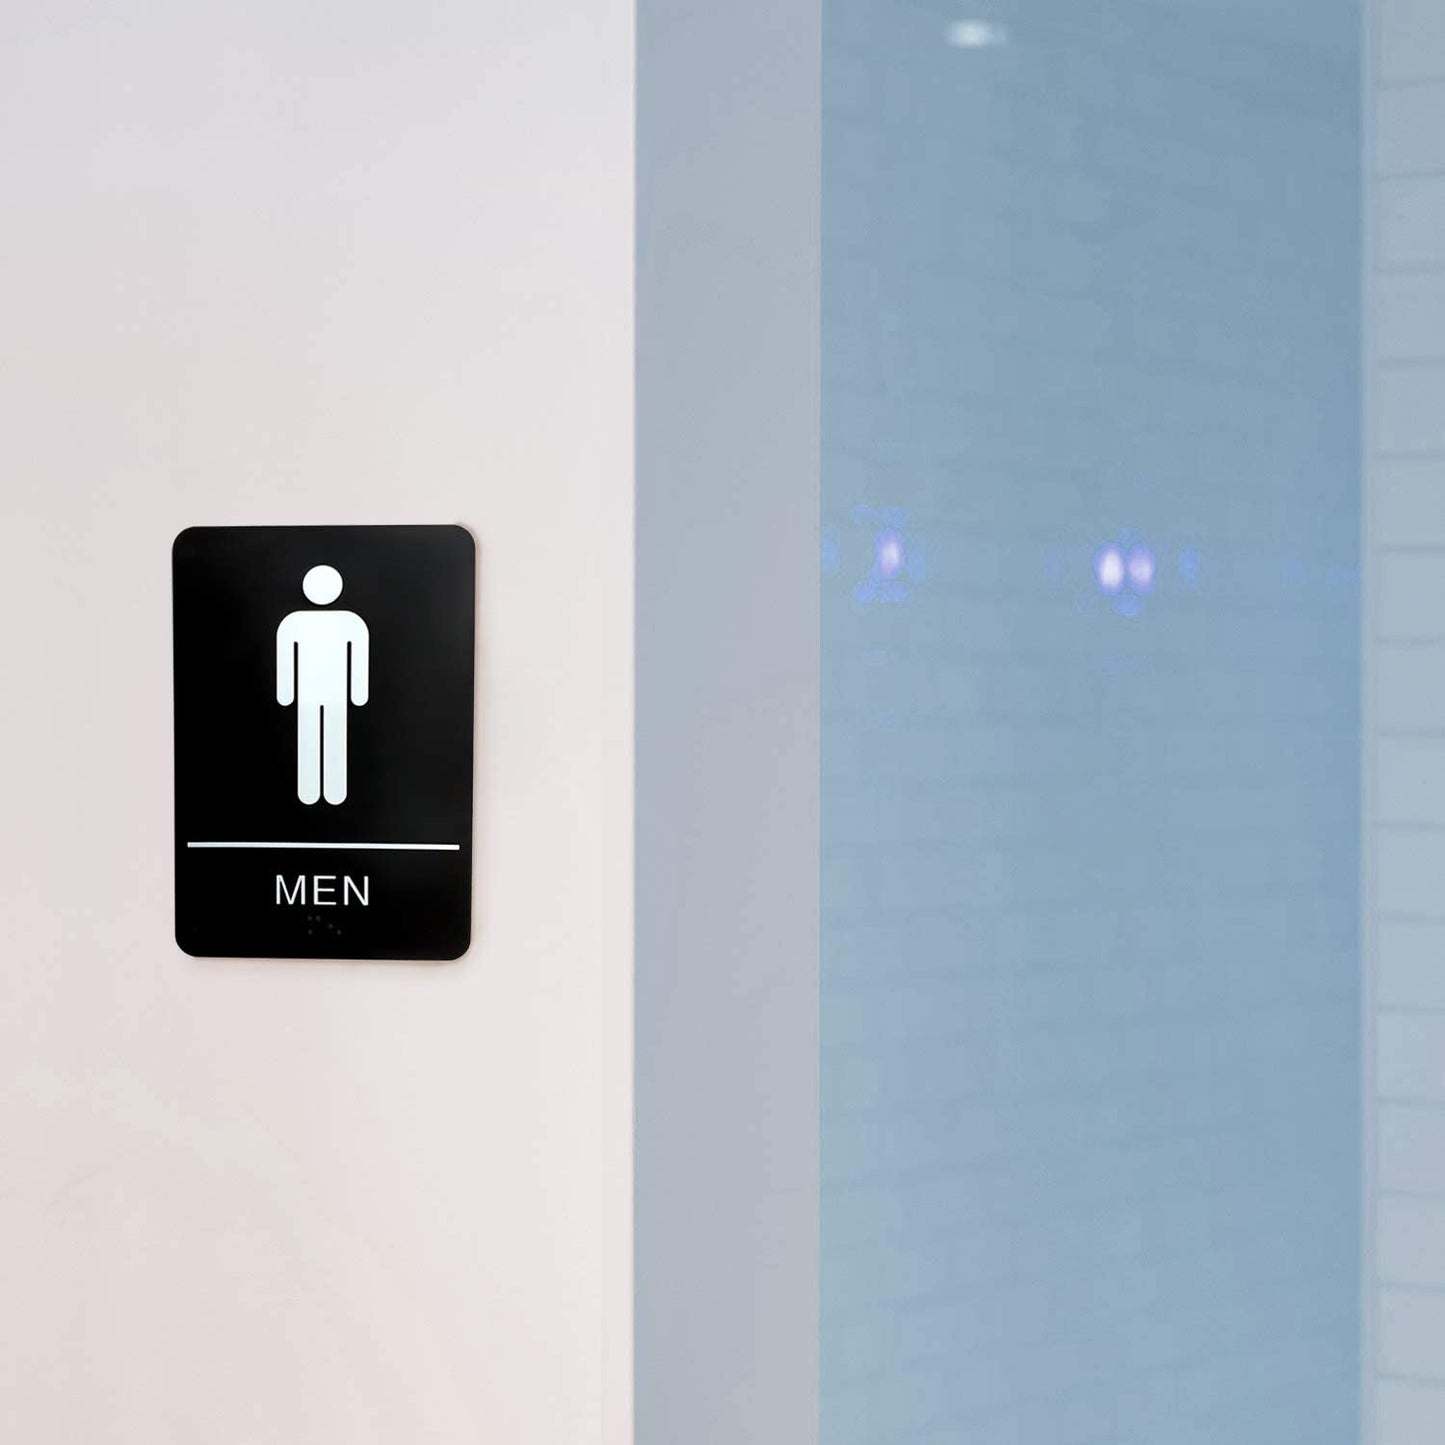 Men's Bathroom And Restroom Sign